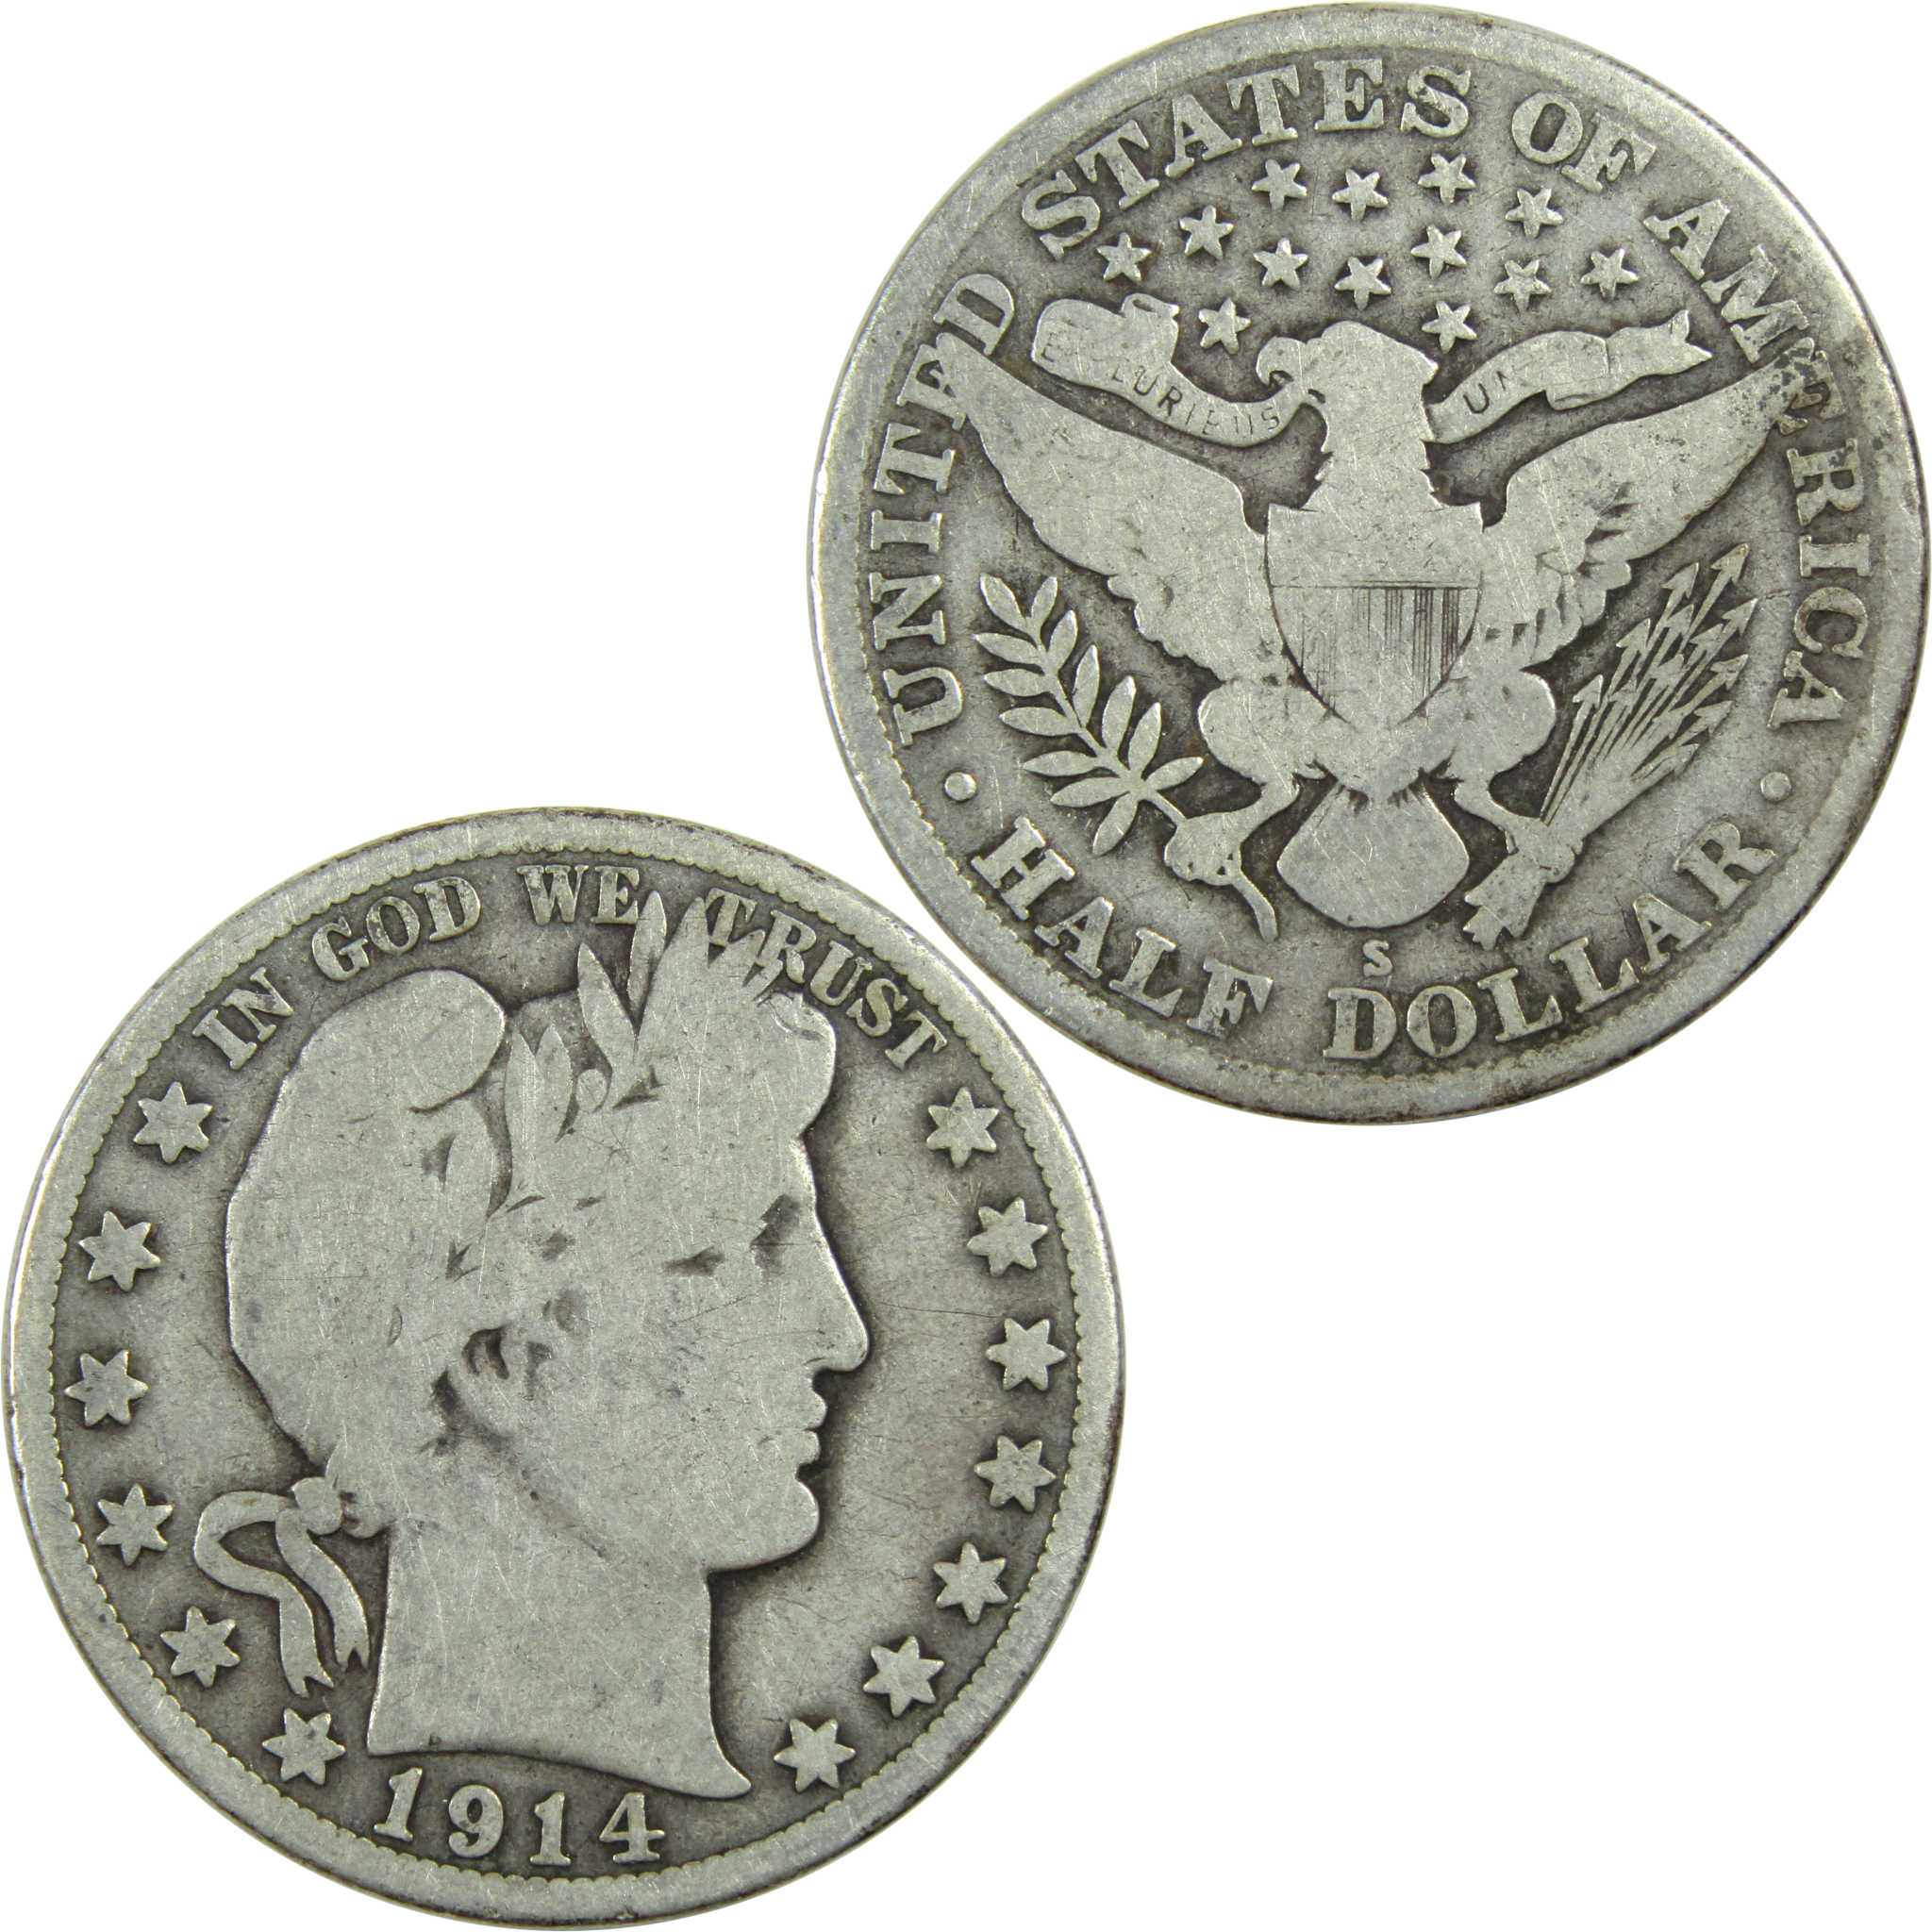 1914 S Barber Half Dollar G Good Silver 50c Coin SKU:I13275